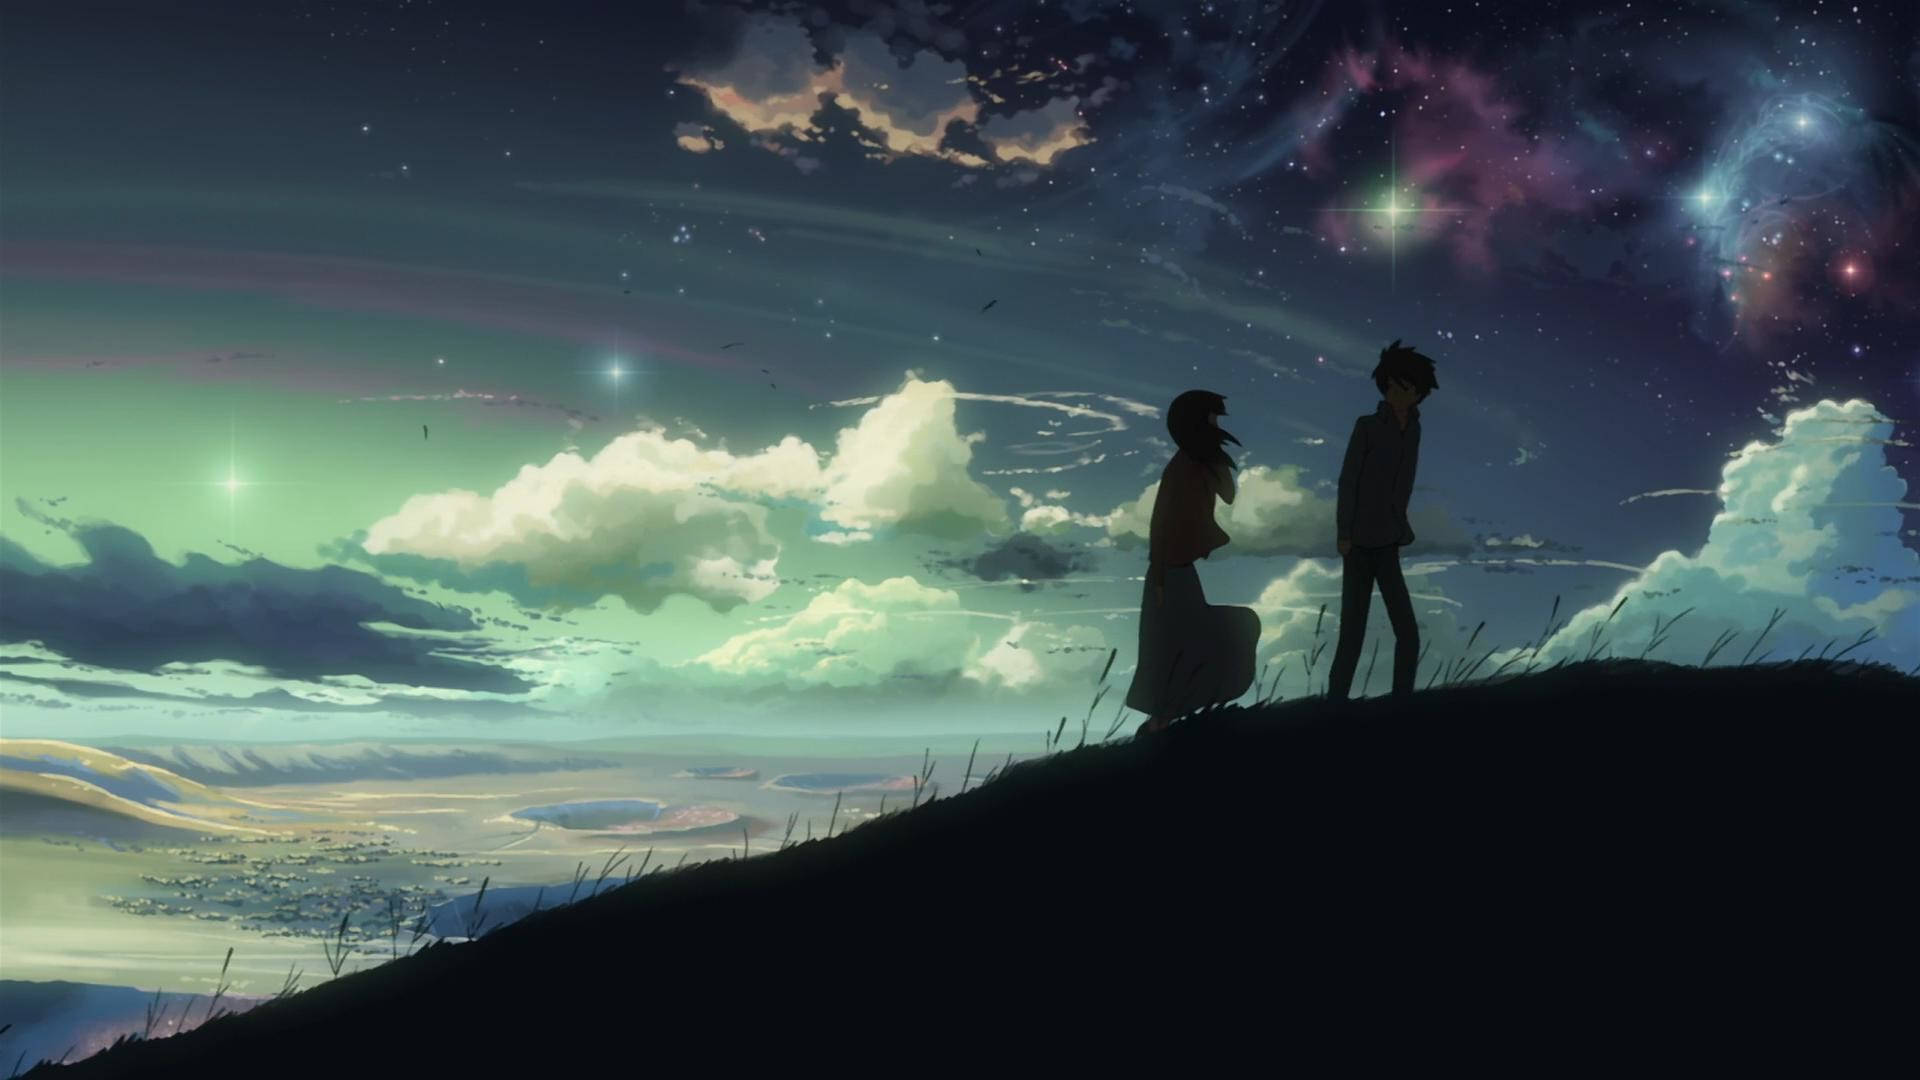 Dark Night Sky Anime Hd Scenery Wallpaper